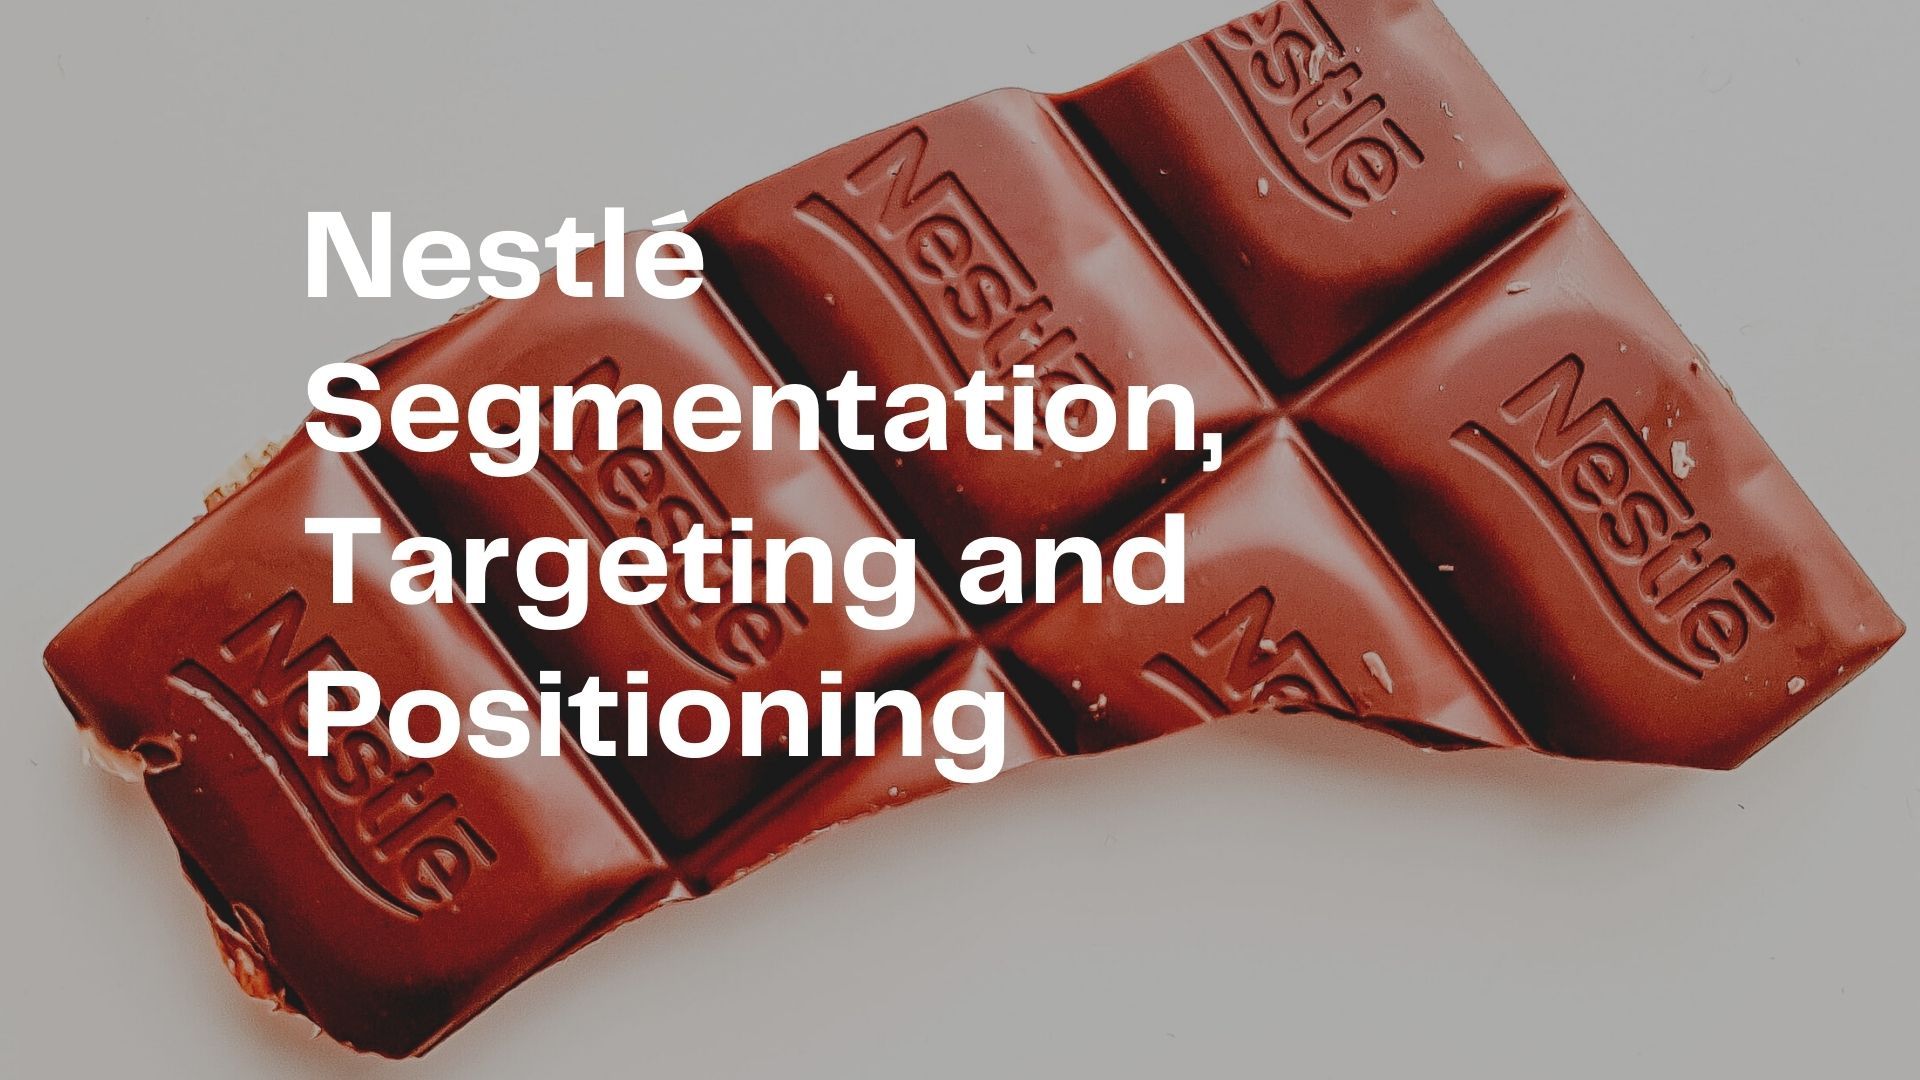 Nestle Segmentation, Targeting and Positioning.jpg